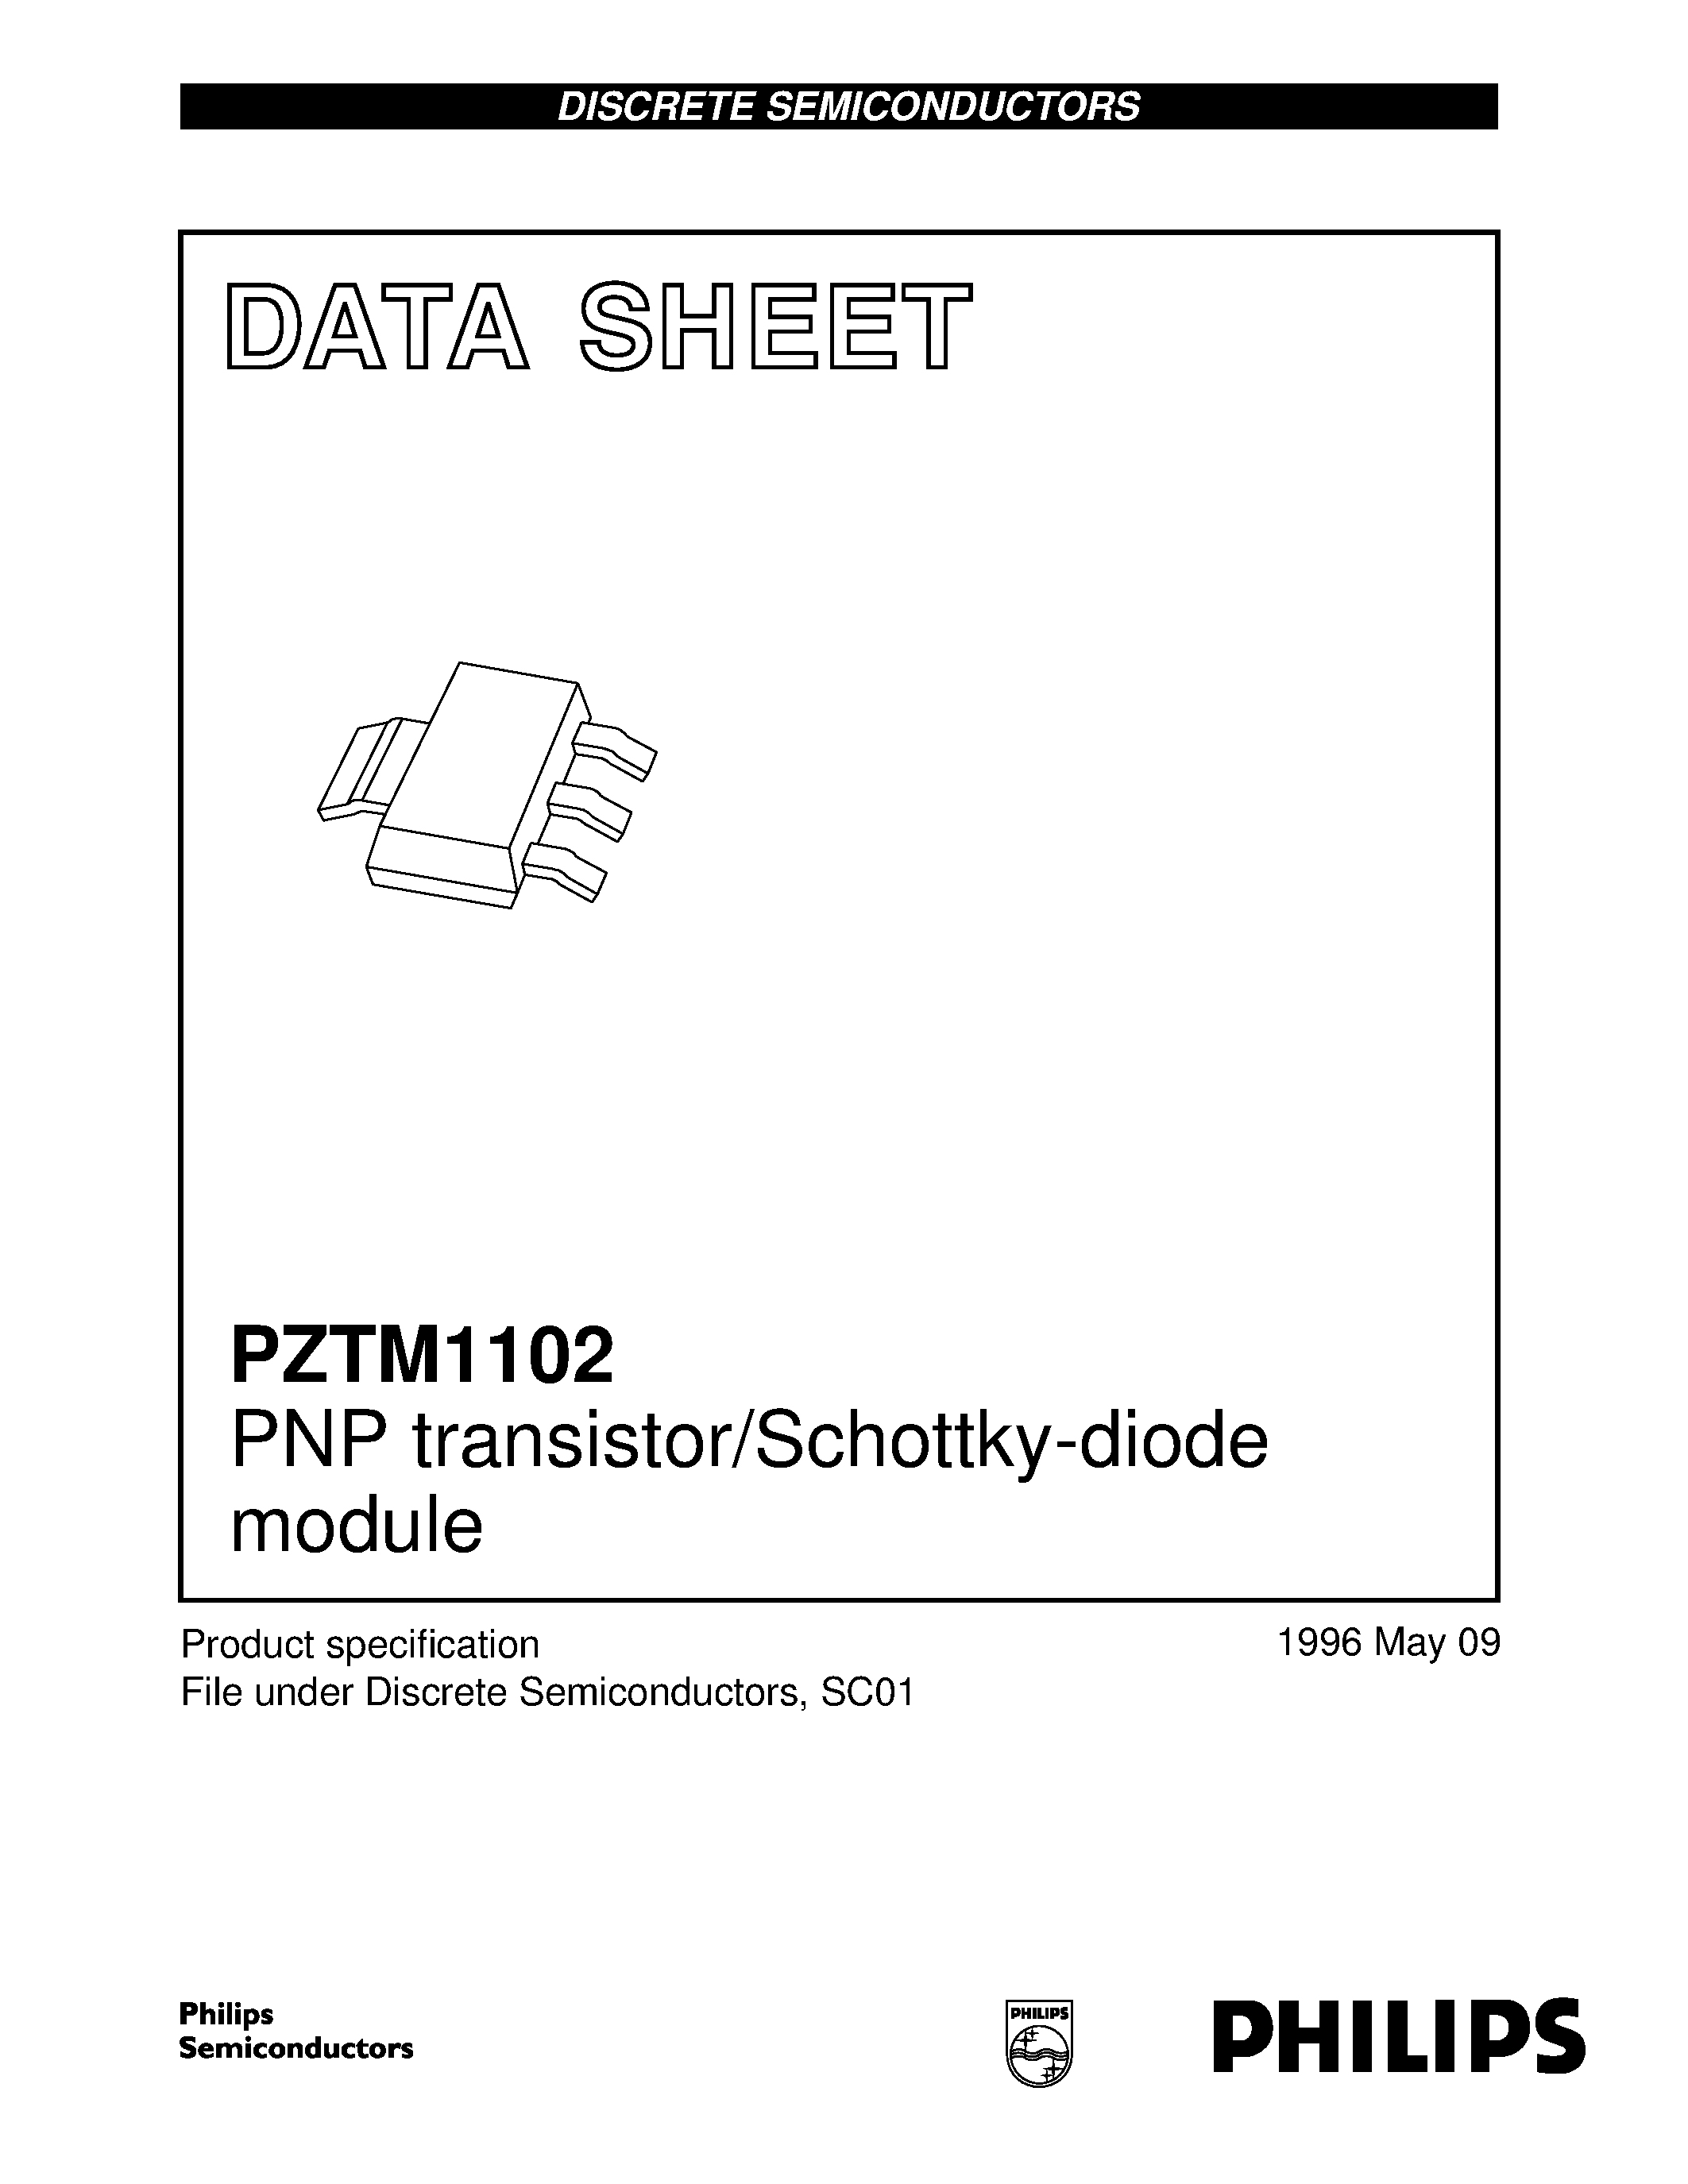 Datasheet PZTM1102 - PNP transistor/Schottky-diode module page 1